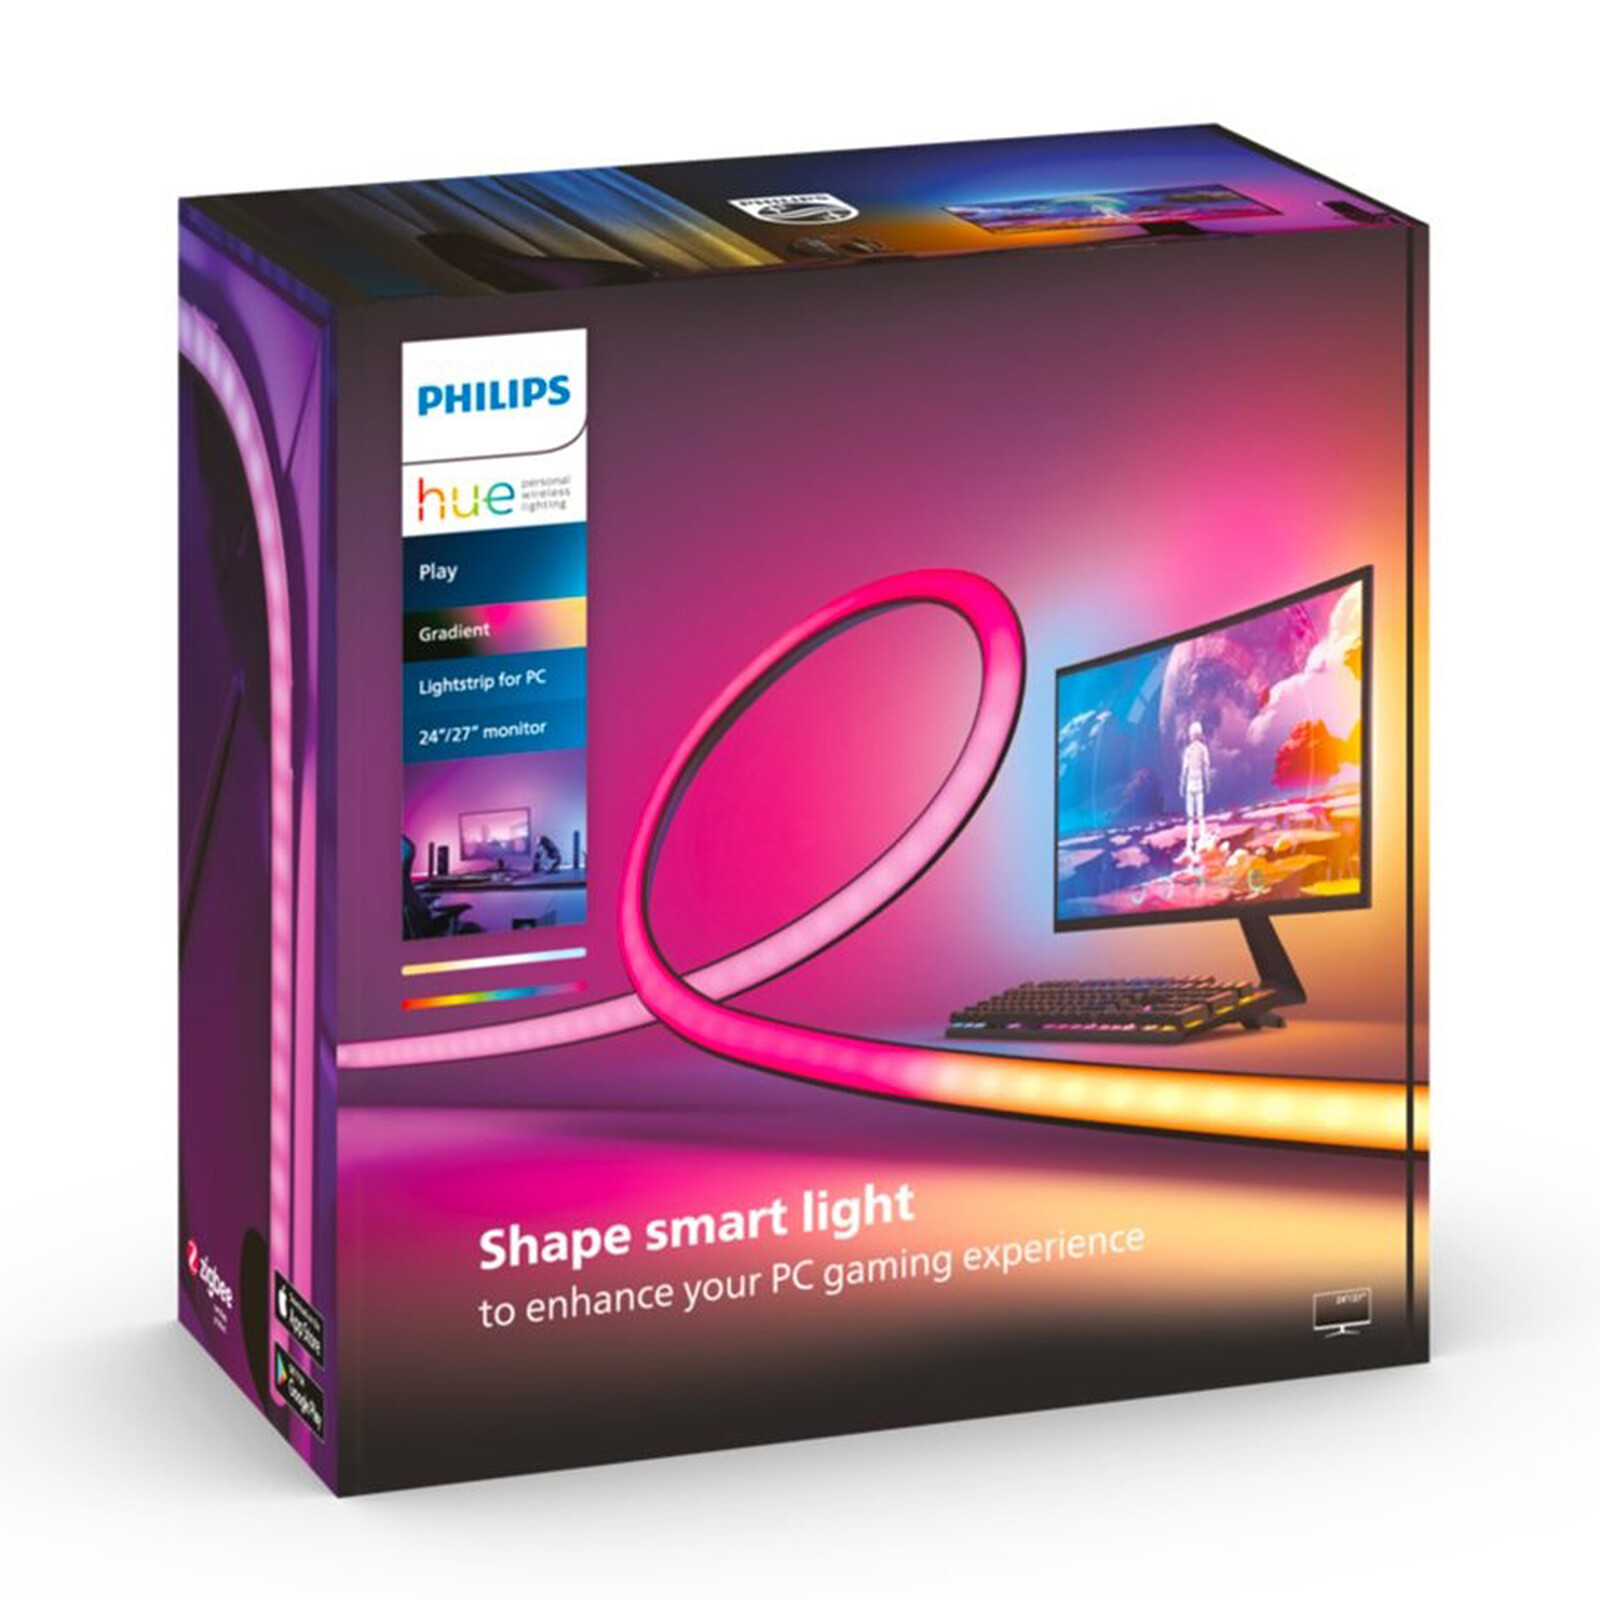 Philips Hue Play Gradient PC Lightstrip 24 to 27 Smart light bulb LDLC  3-year warranty